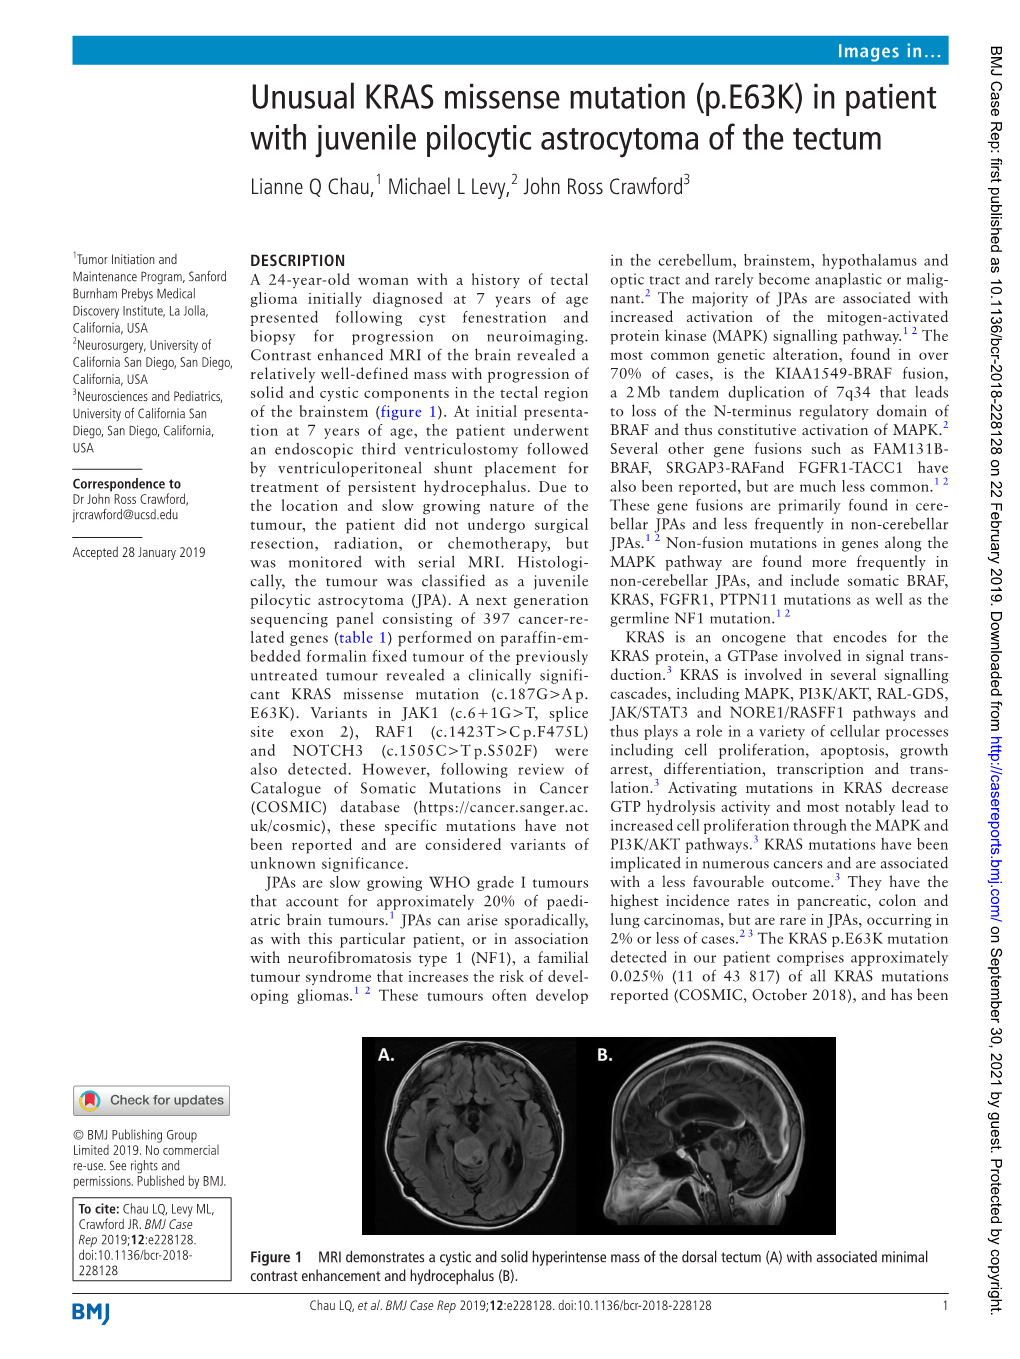 Unusual KRAS Missense Mutation (P.E63K) in Patient with Juvenile Pilocytic Astrocytoma of the Tectum Lianne Q Chau,1 Michael L Levy,2 John Ross Crawford3